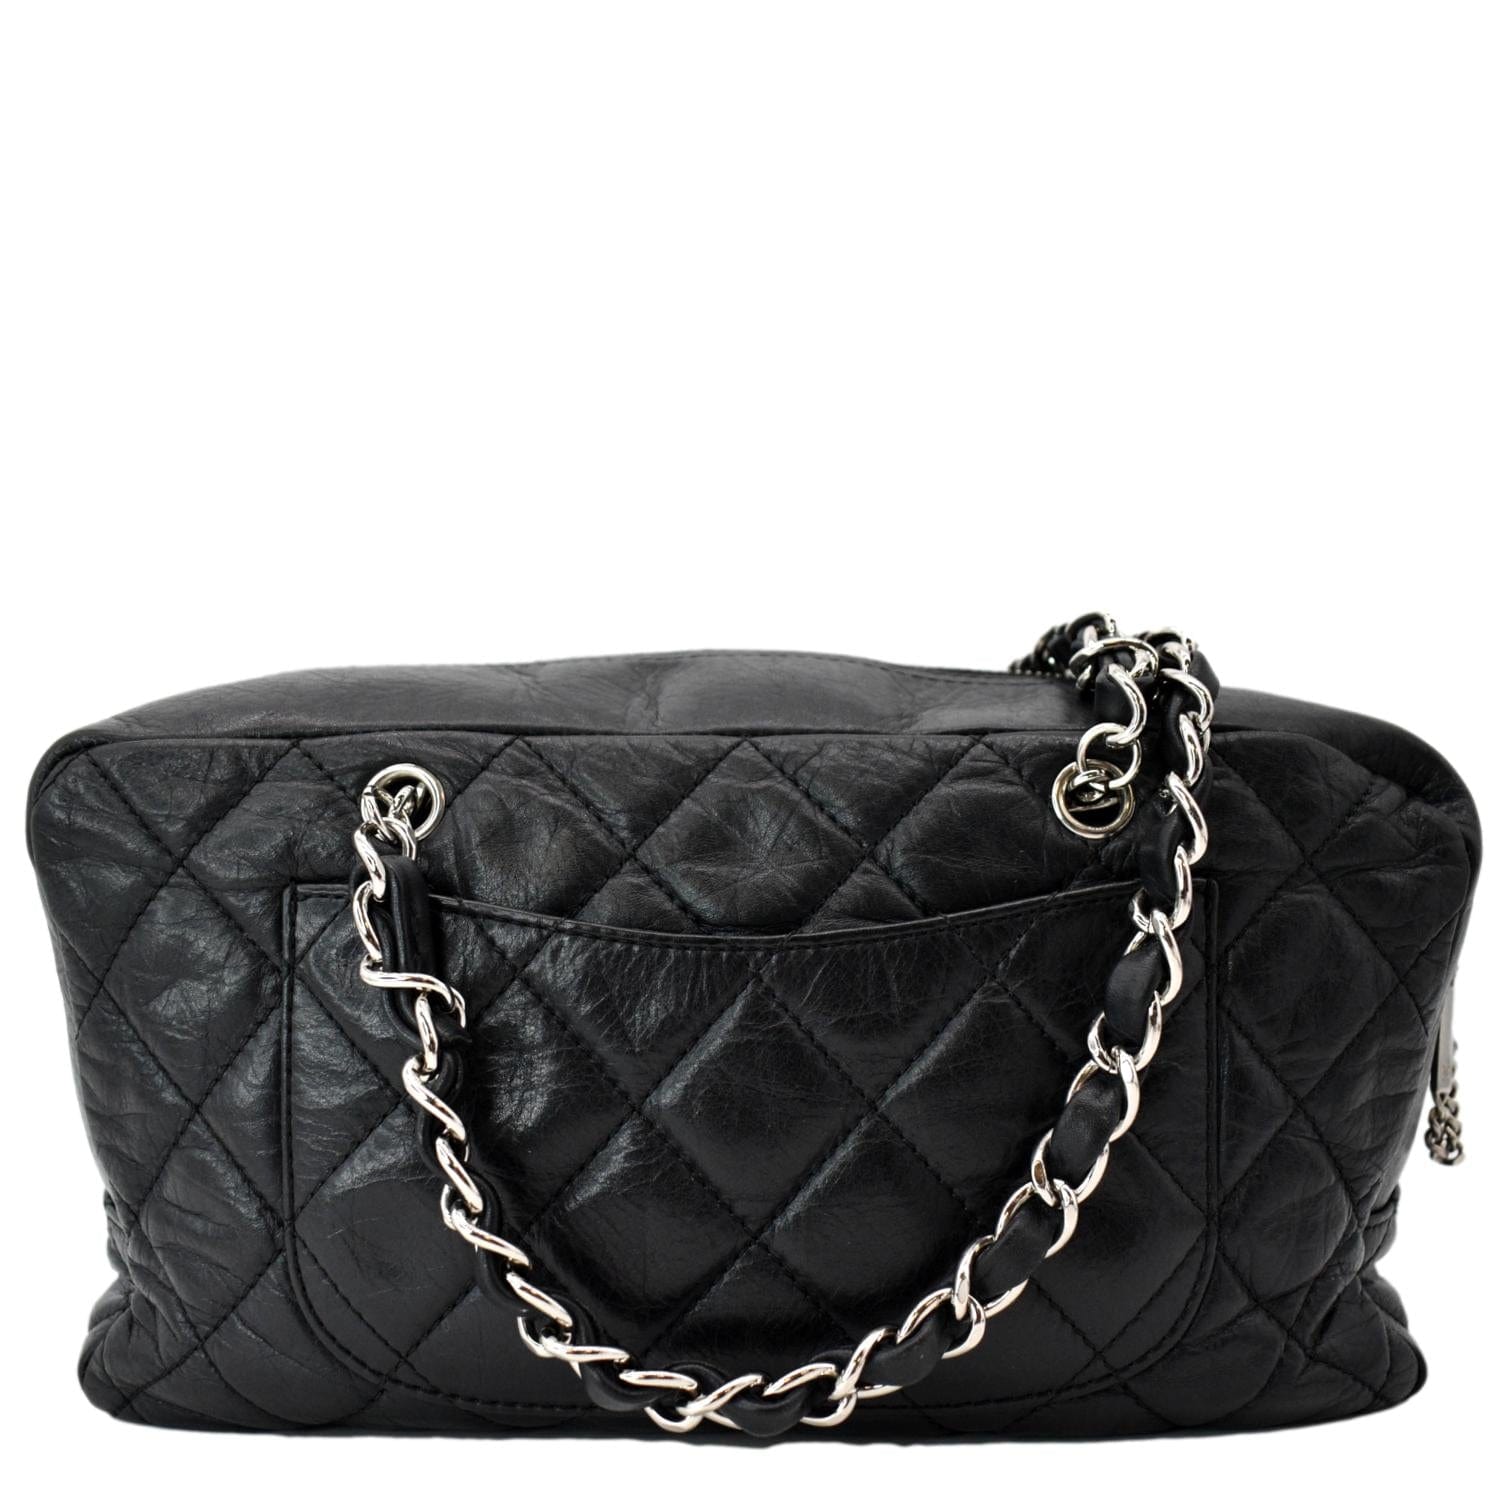 FWRD Renew Chanel Vintage Quilted Chain Shoulder Bag in Black